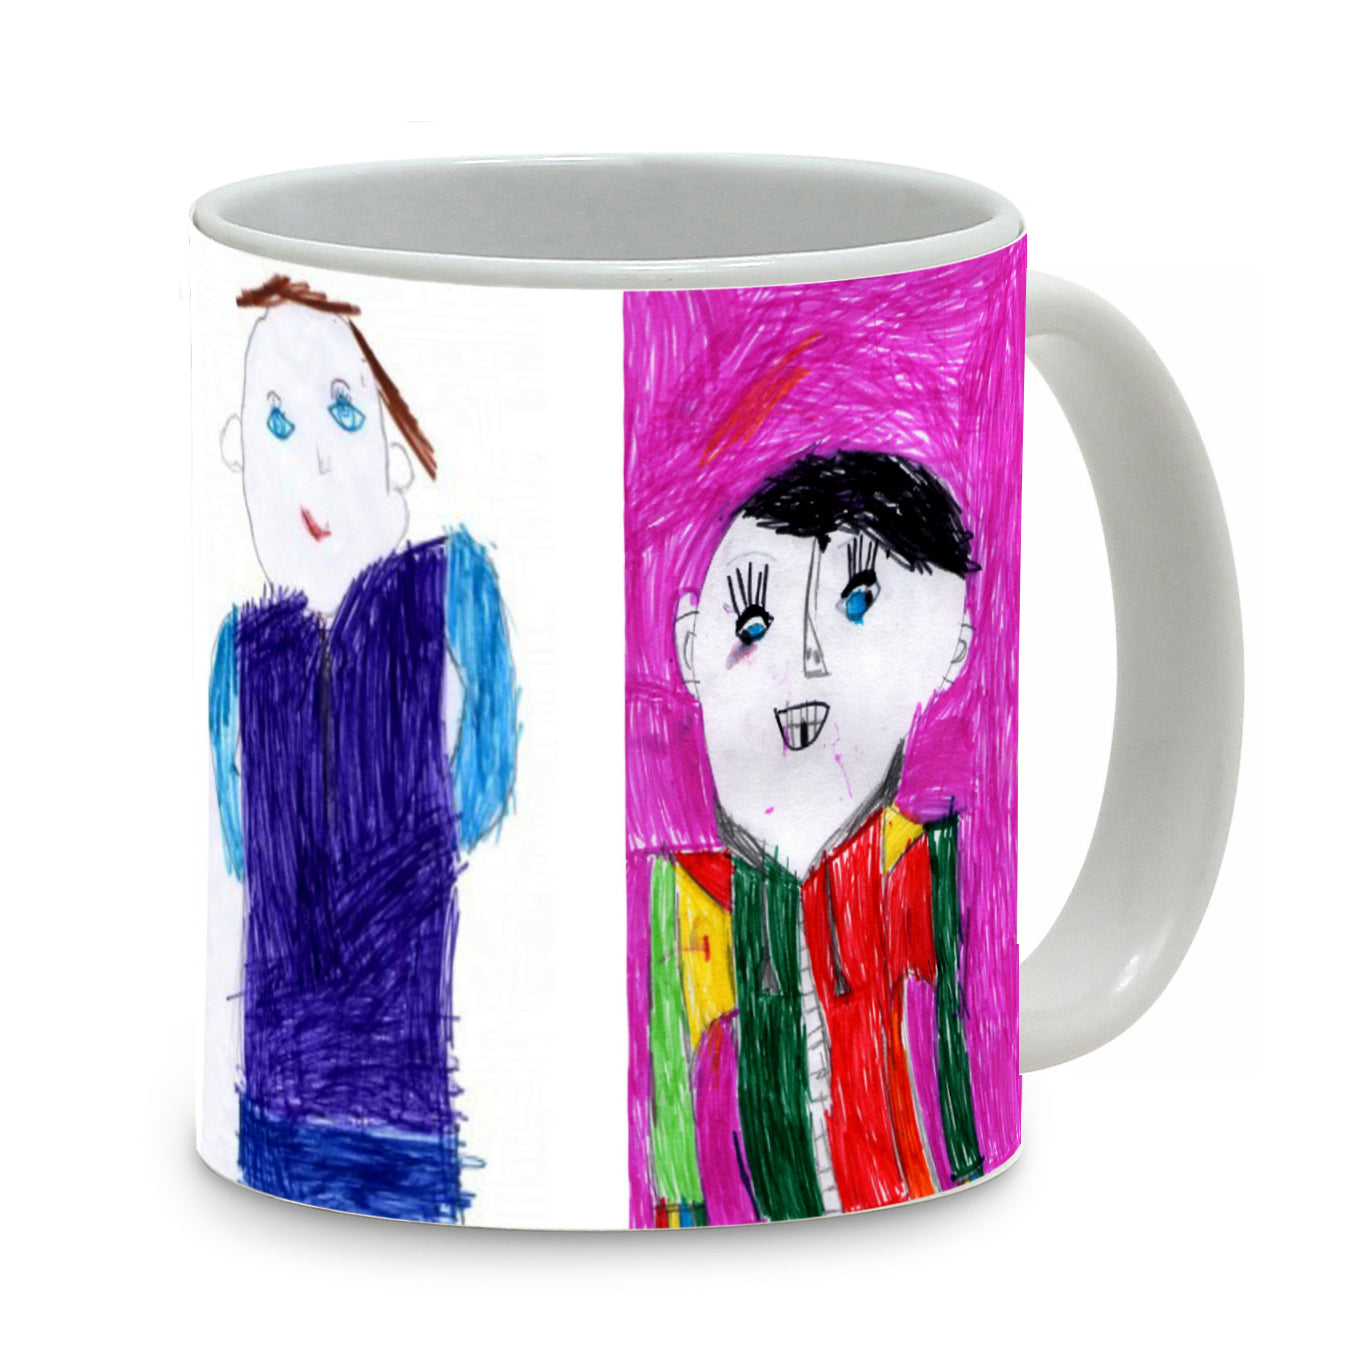 SUBLIMART: Fun Time - Mug with kid drawings (Design #CIP12)